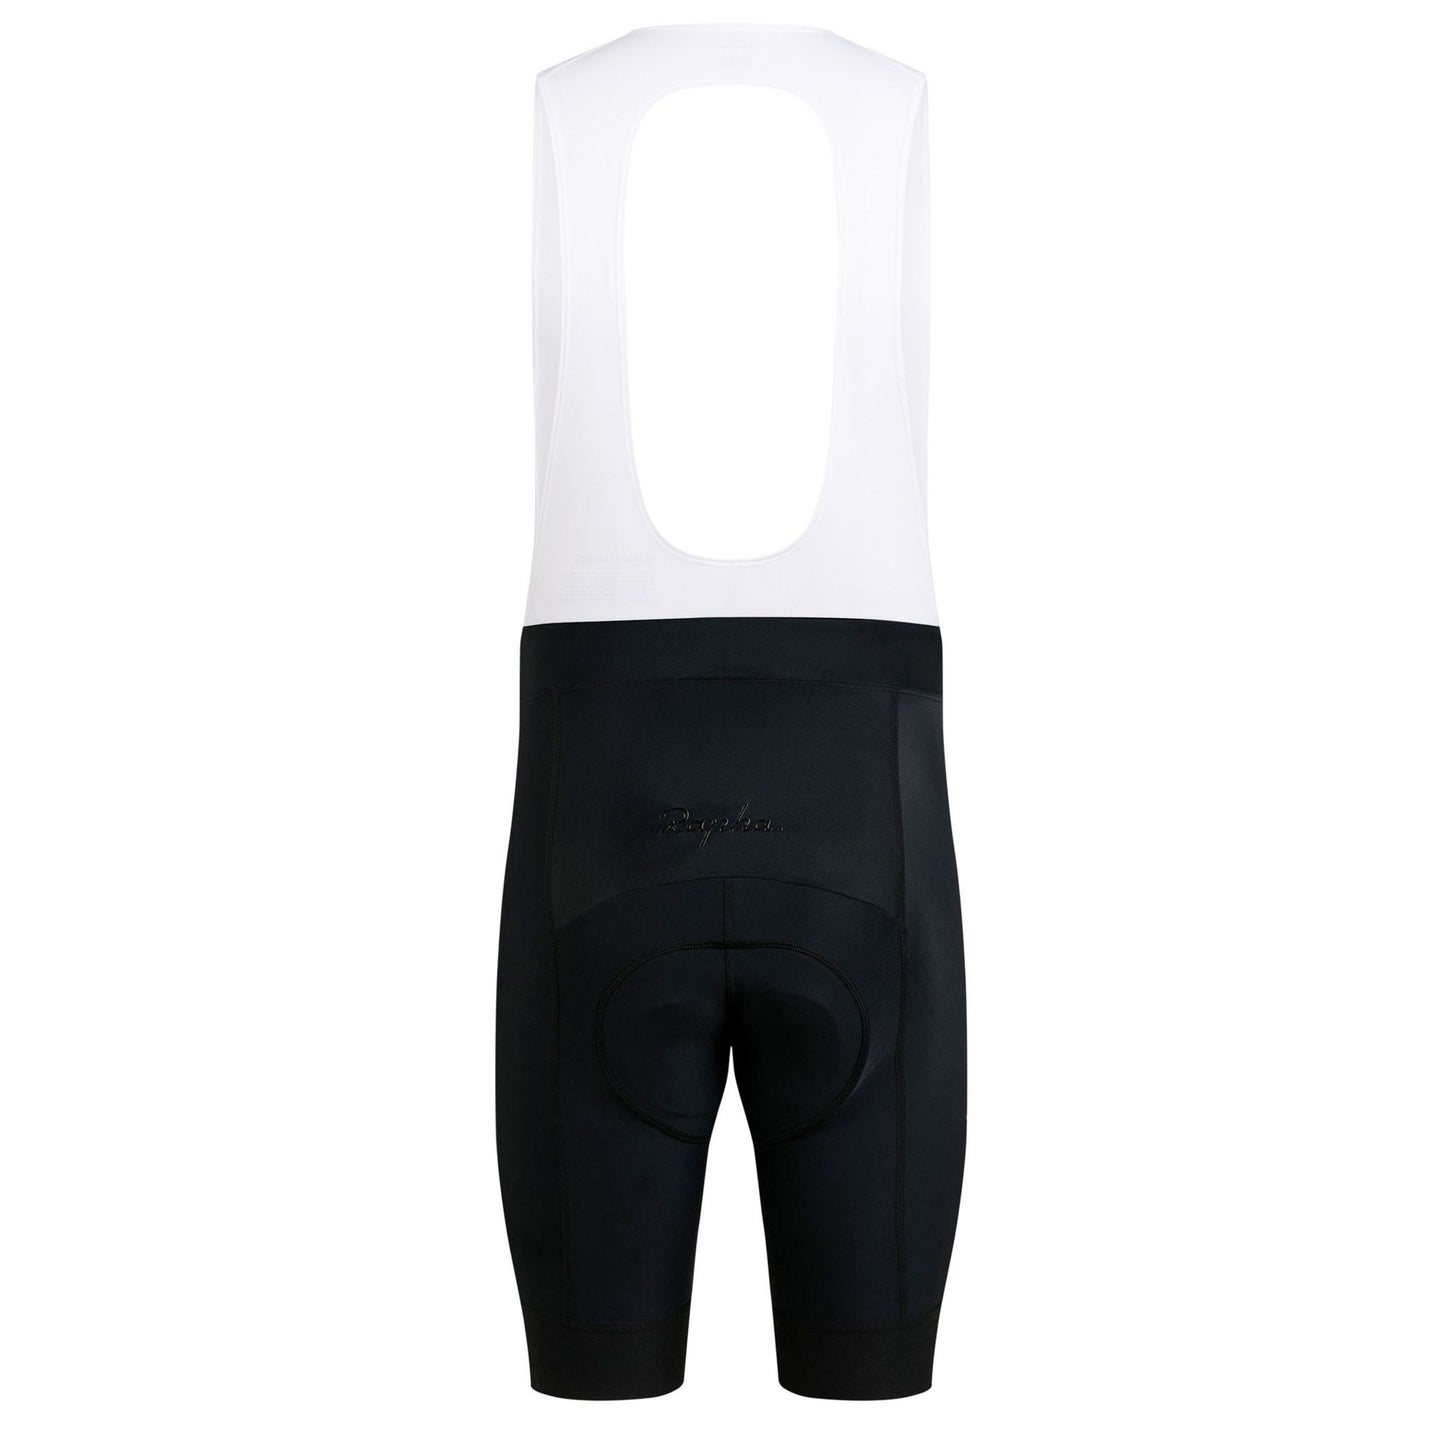 Rapha Mens Core Bib Shorts, Black/White